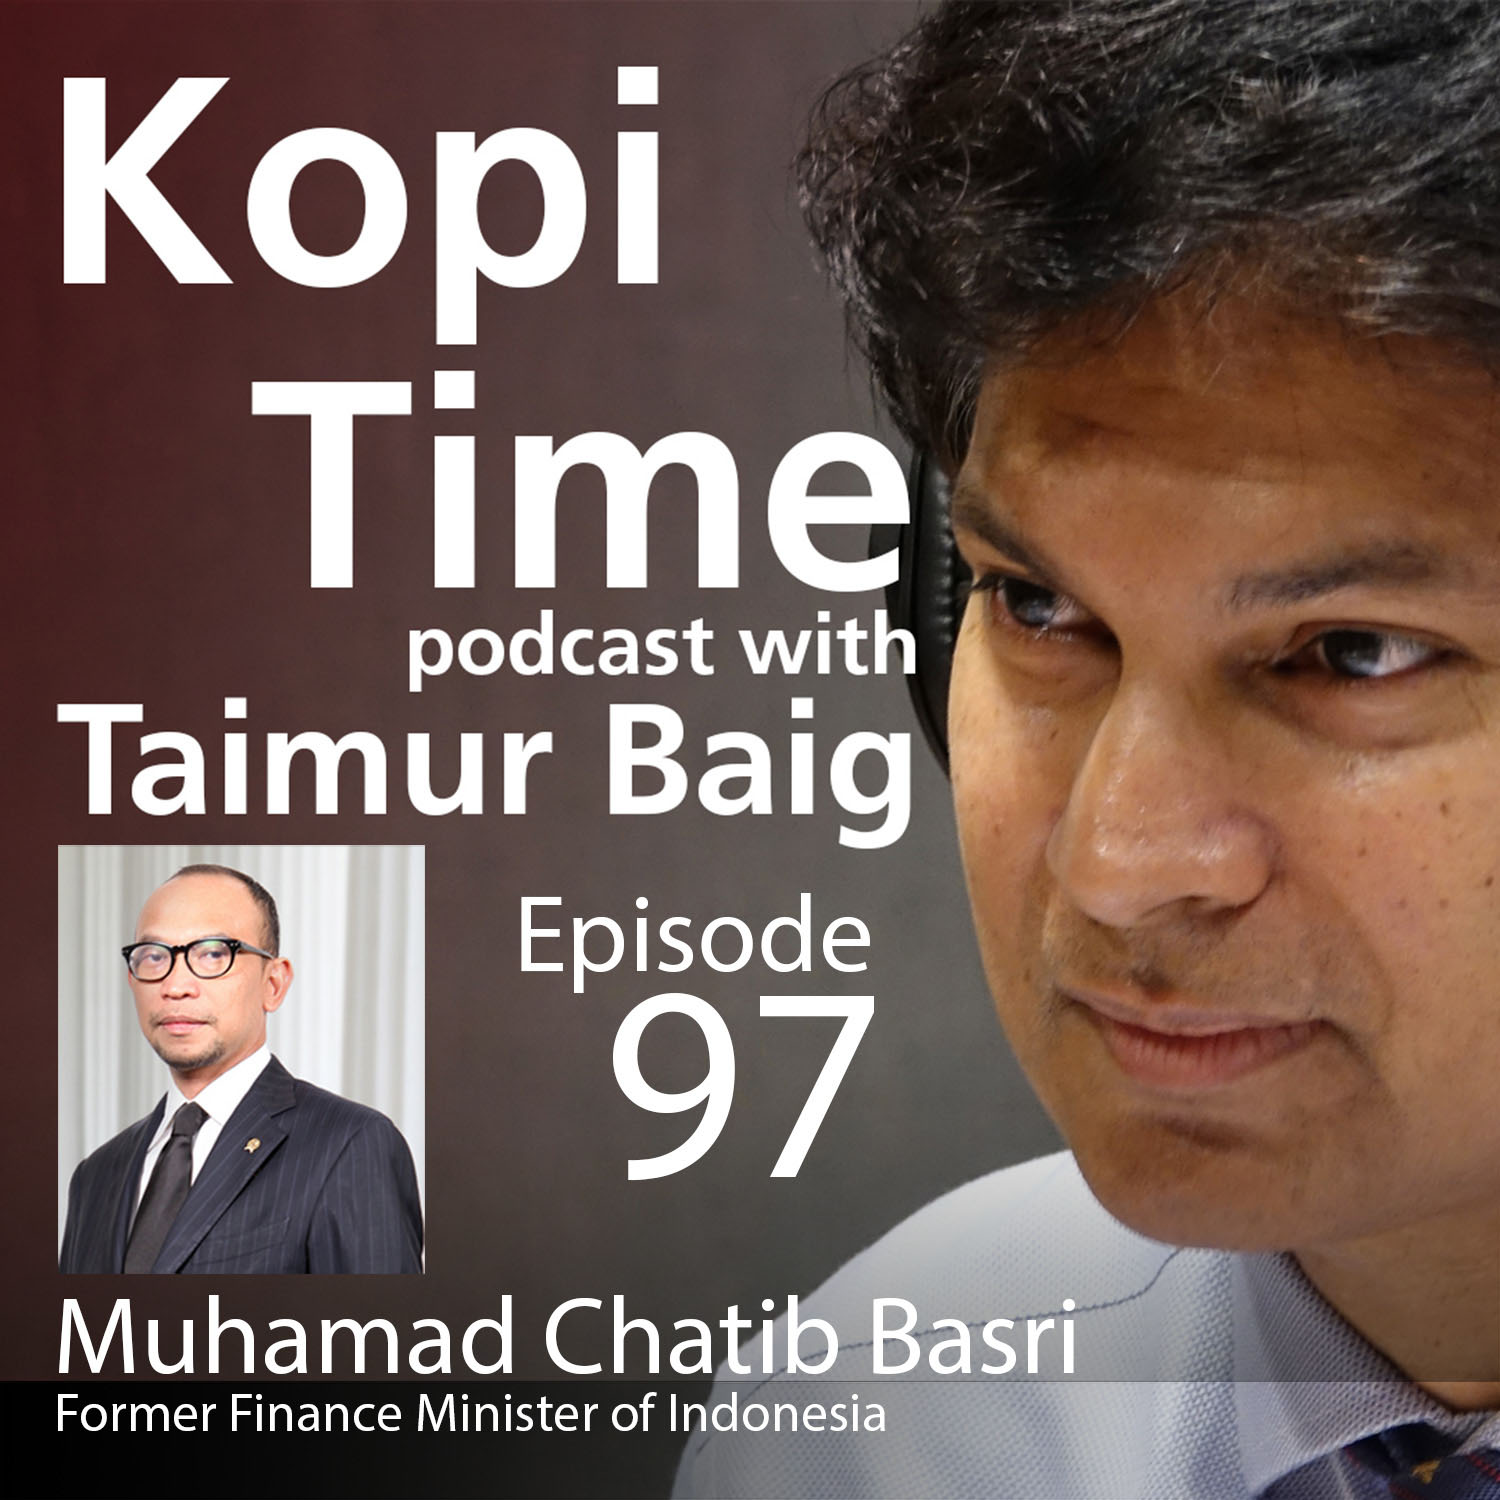 Kopi Time E097 - Chatib Basri on Indonesia